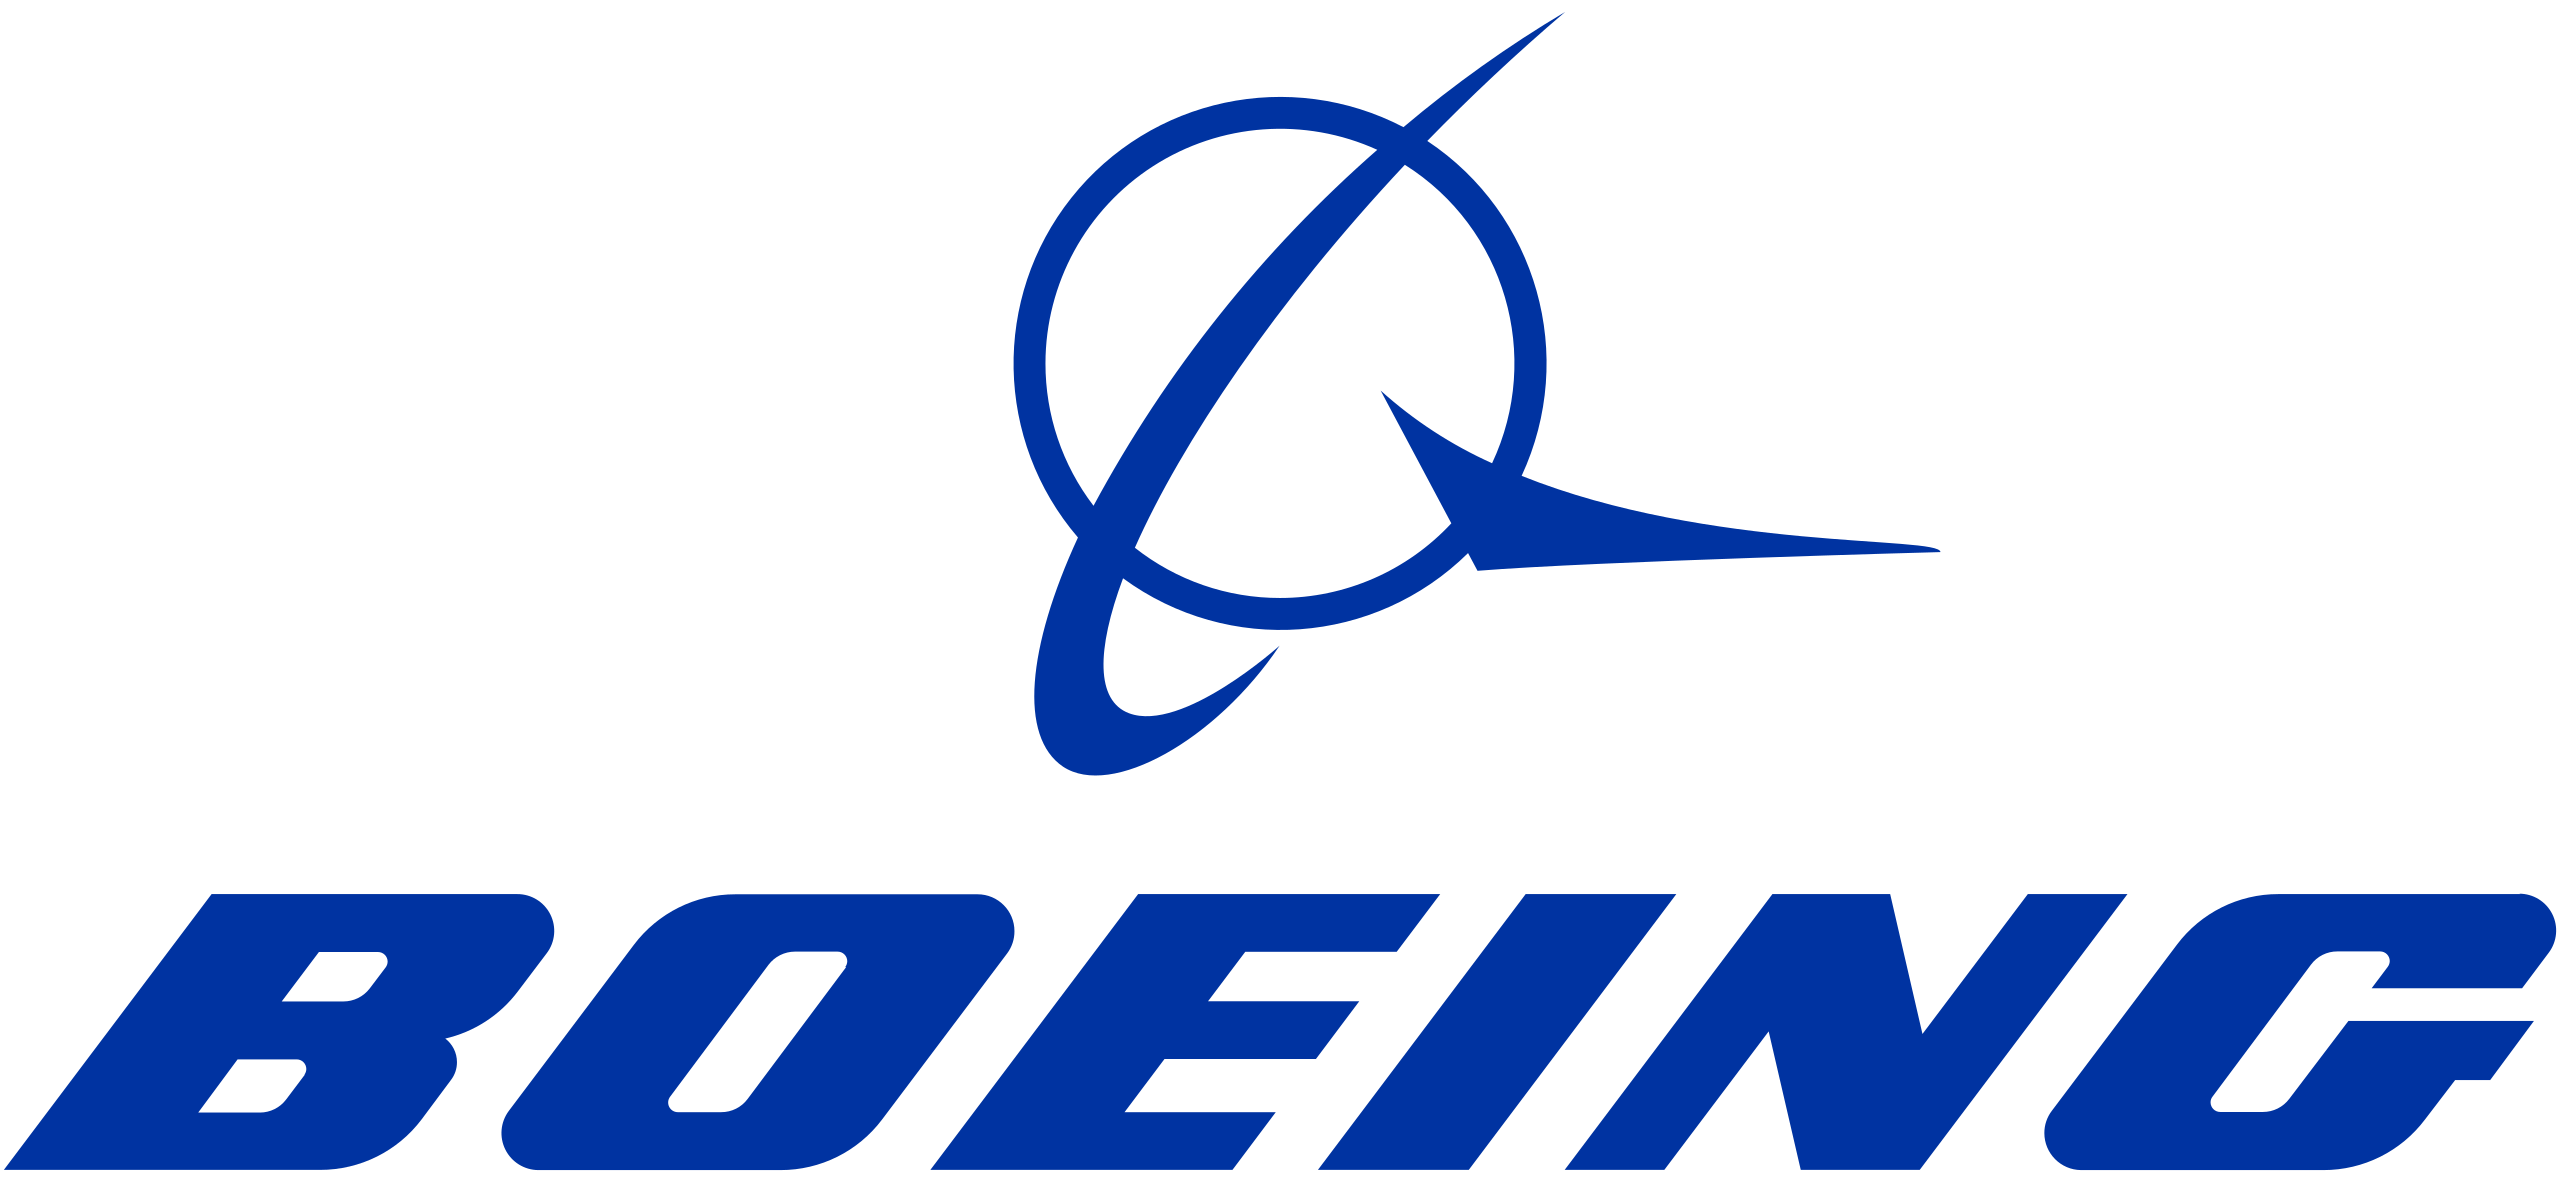 Boeing_full_logo_(variant).svg.png